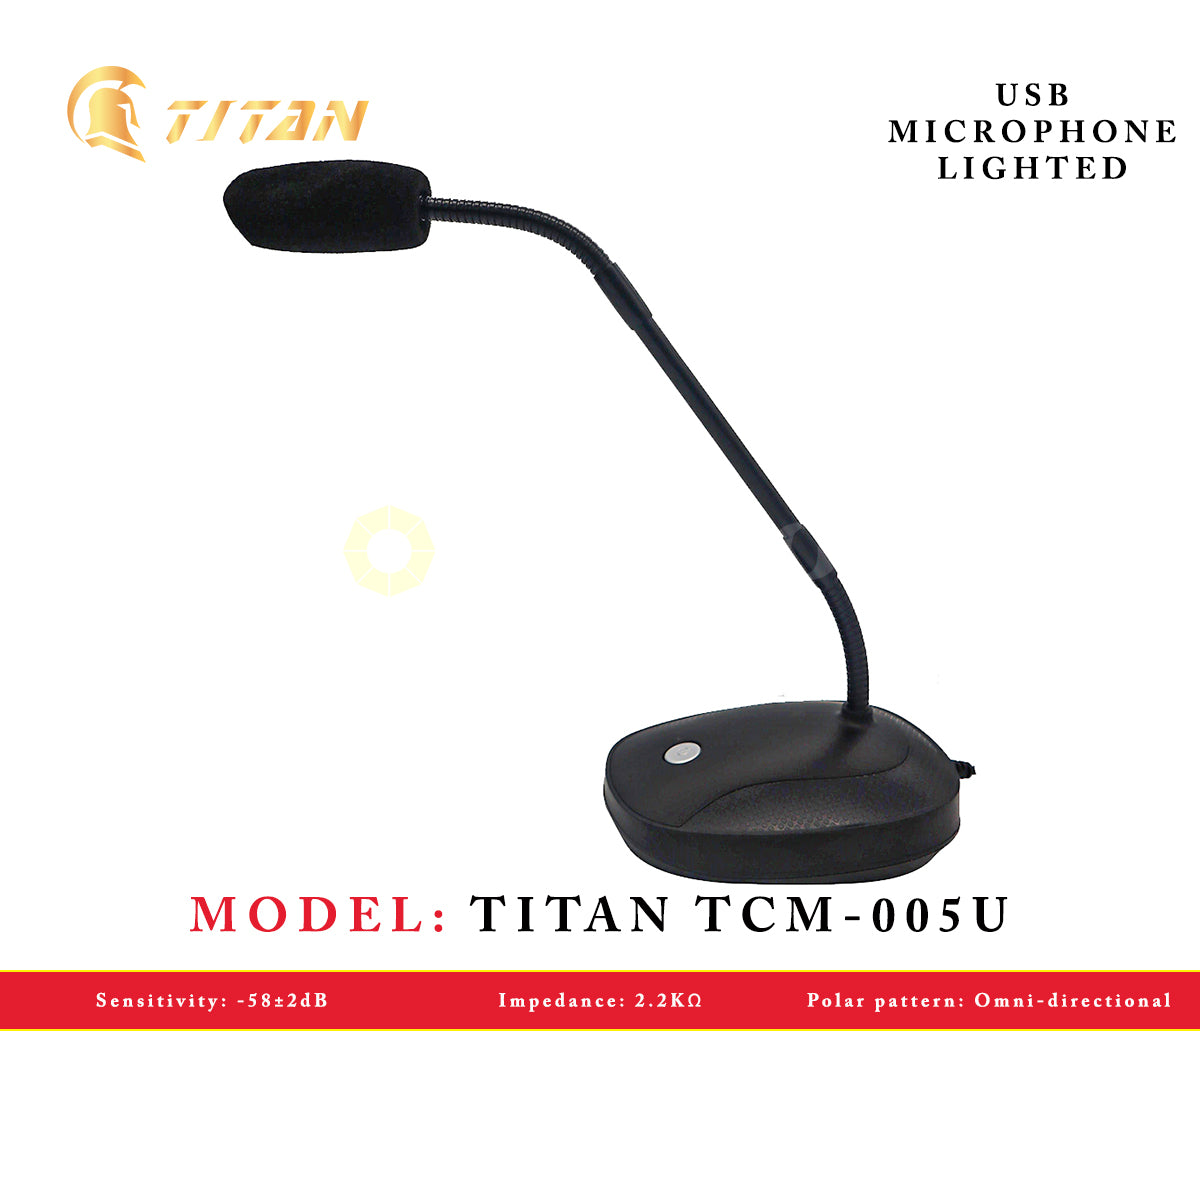 TITAN TCM-005U USB MICROPHONE LIGHTED